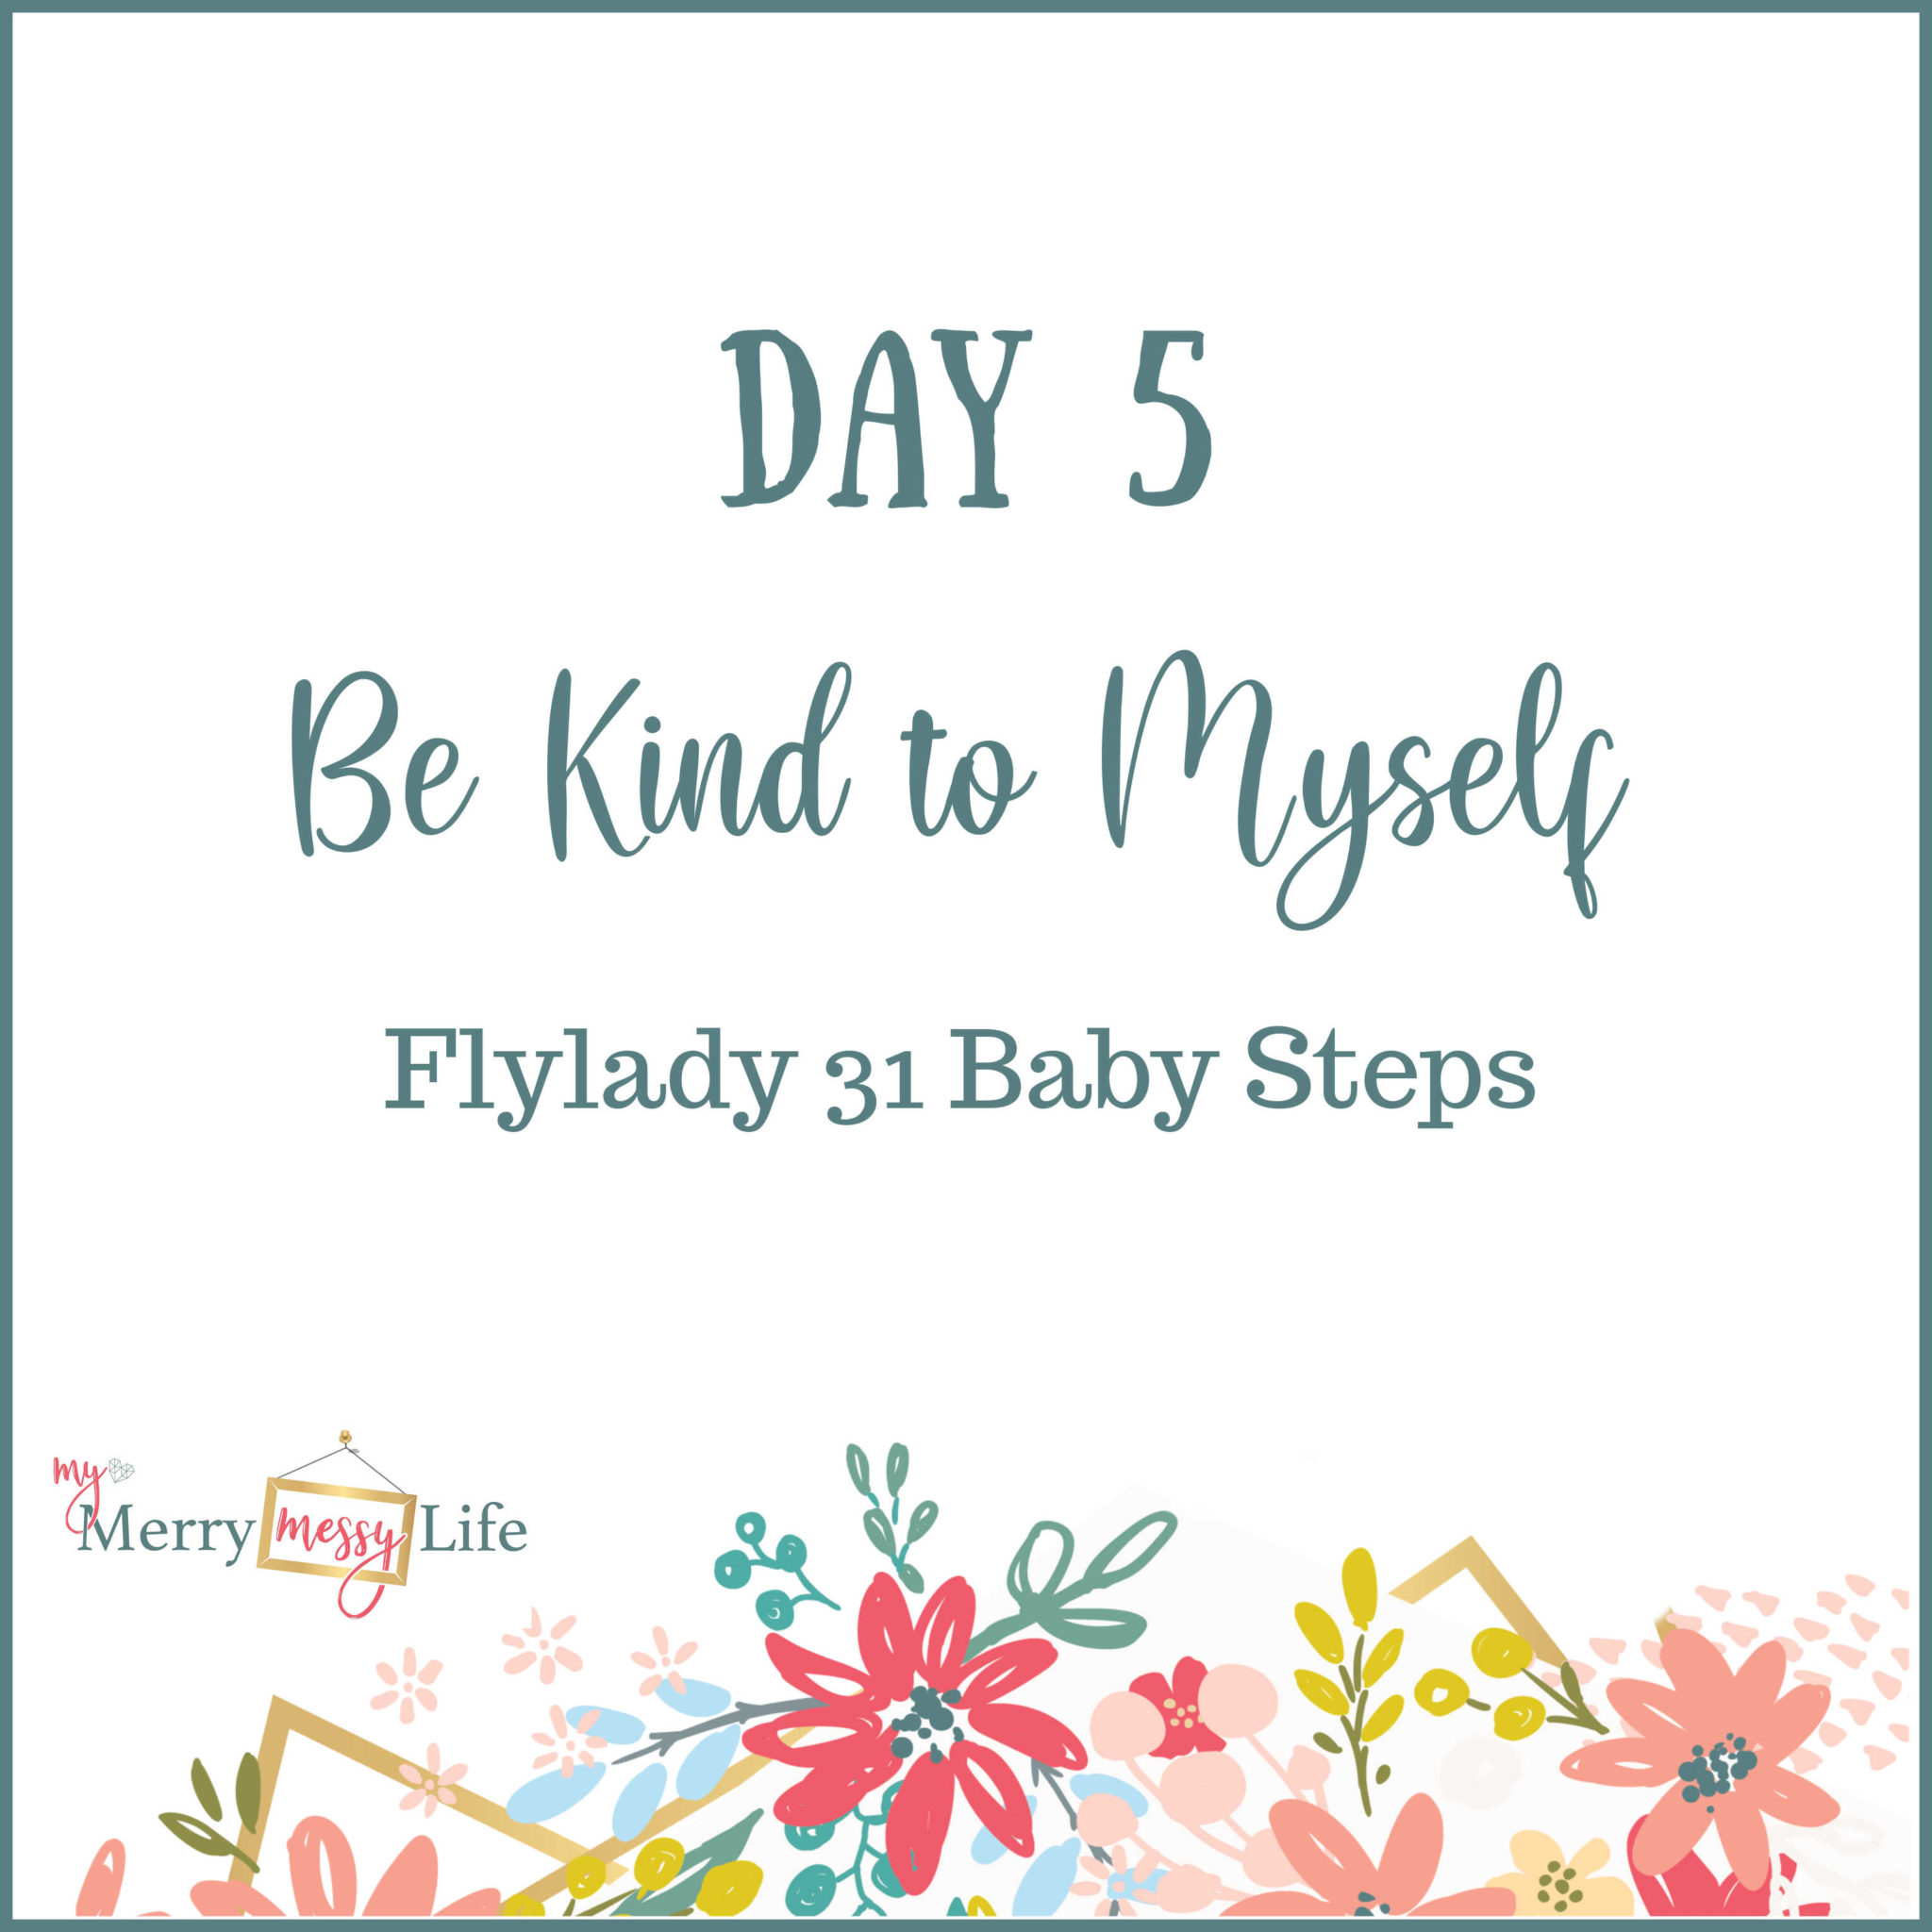 Flylady 31 Baby Steps - Day 5 - Be Kind to Myself